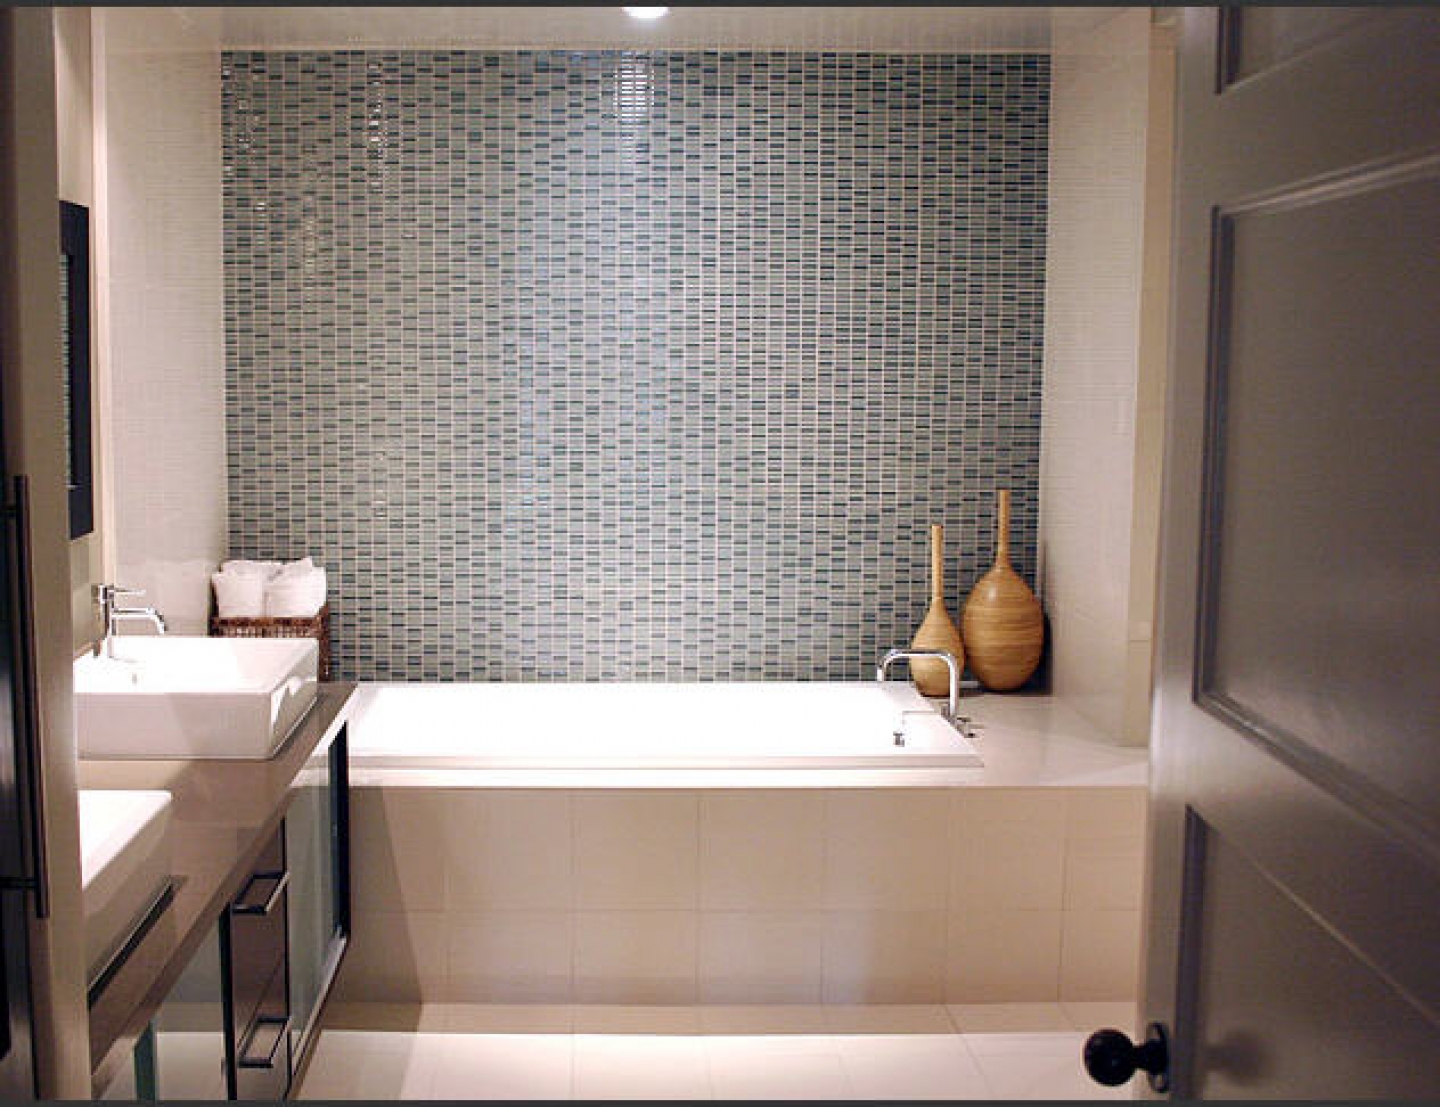 Small-space-modern-bathroom-tile-design-ideas